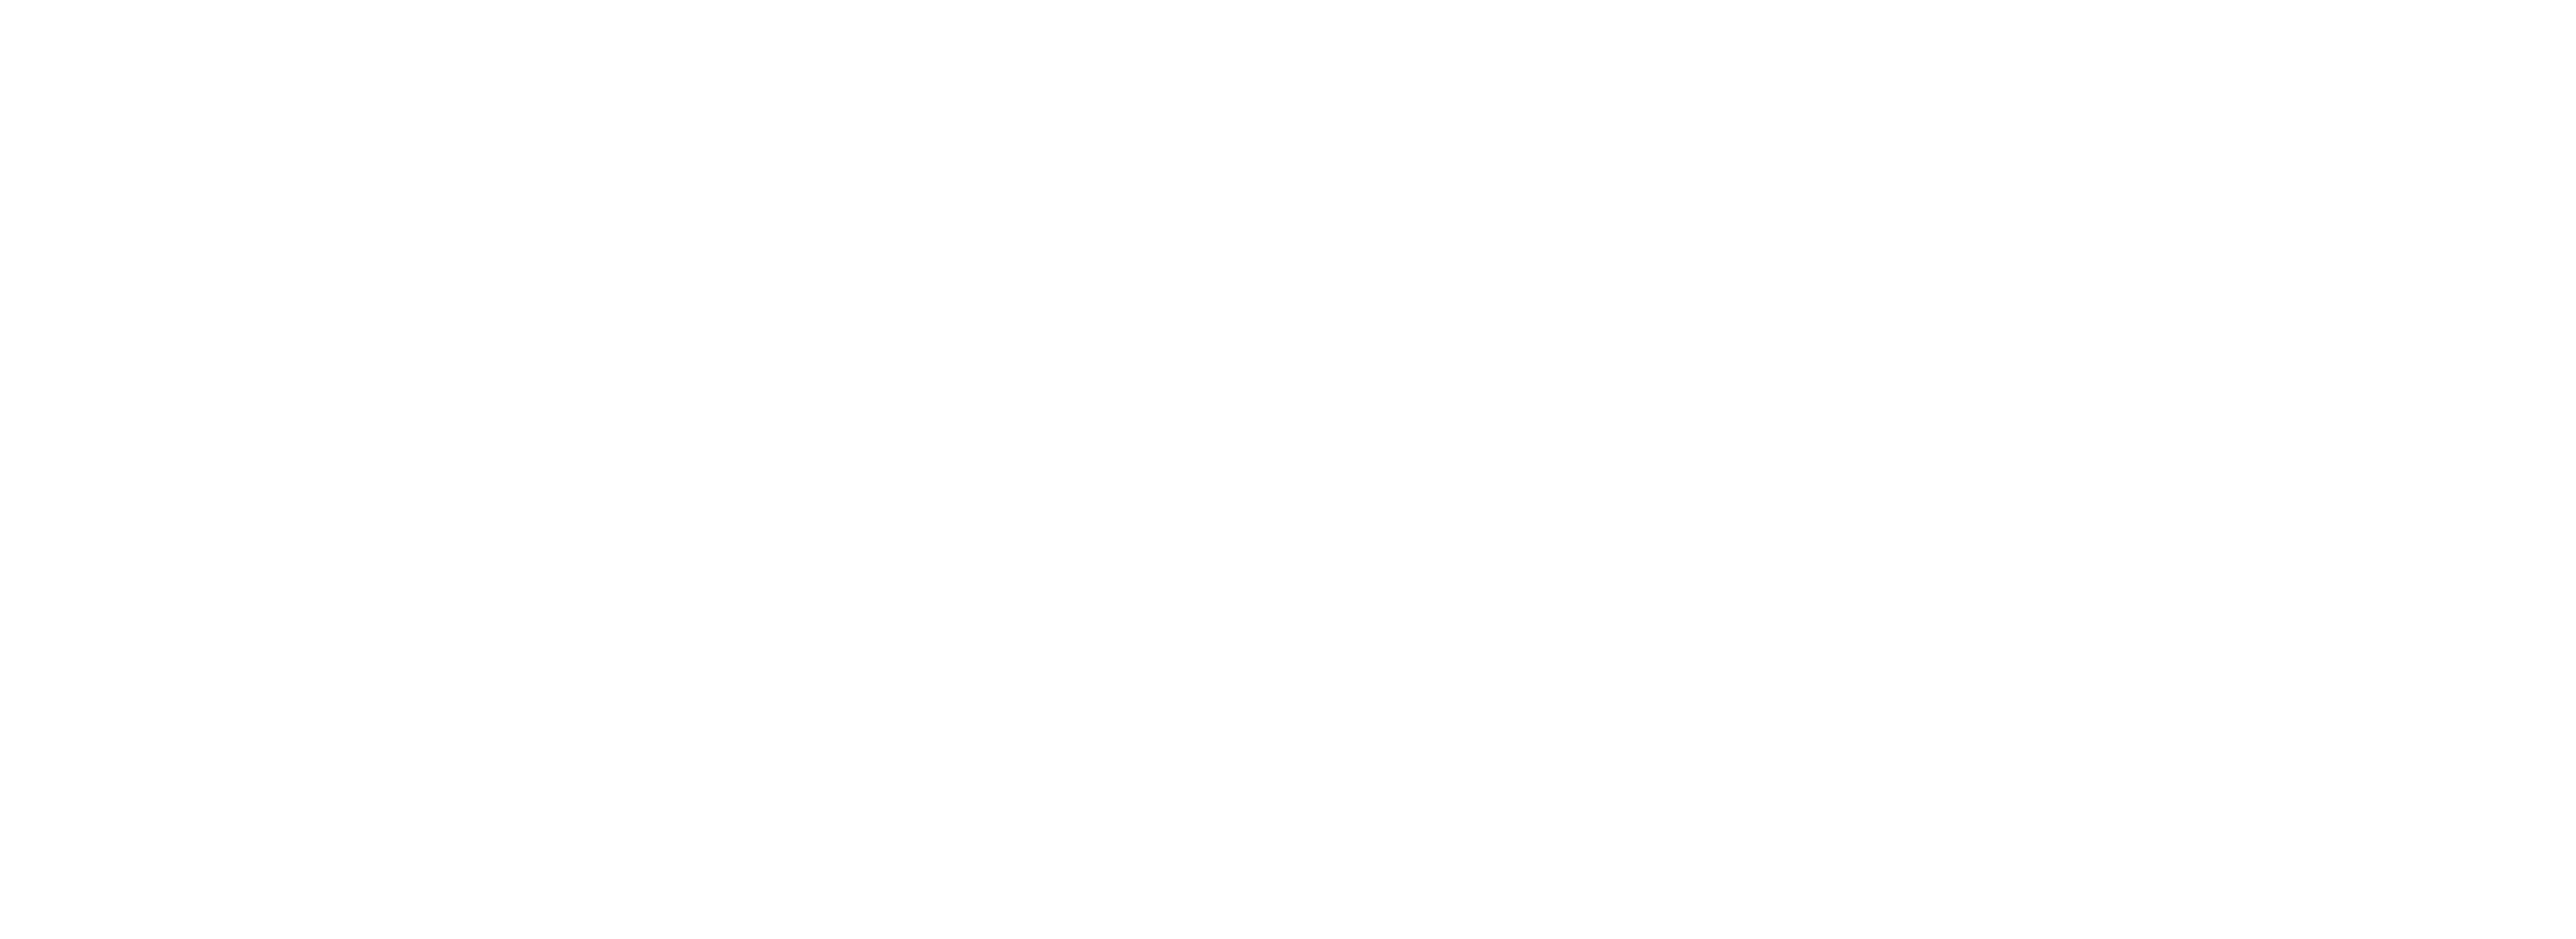 Ashtanga Yoga Newcastle